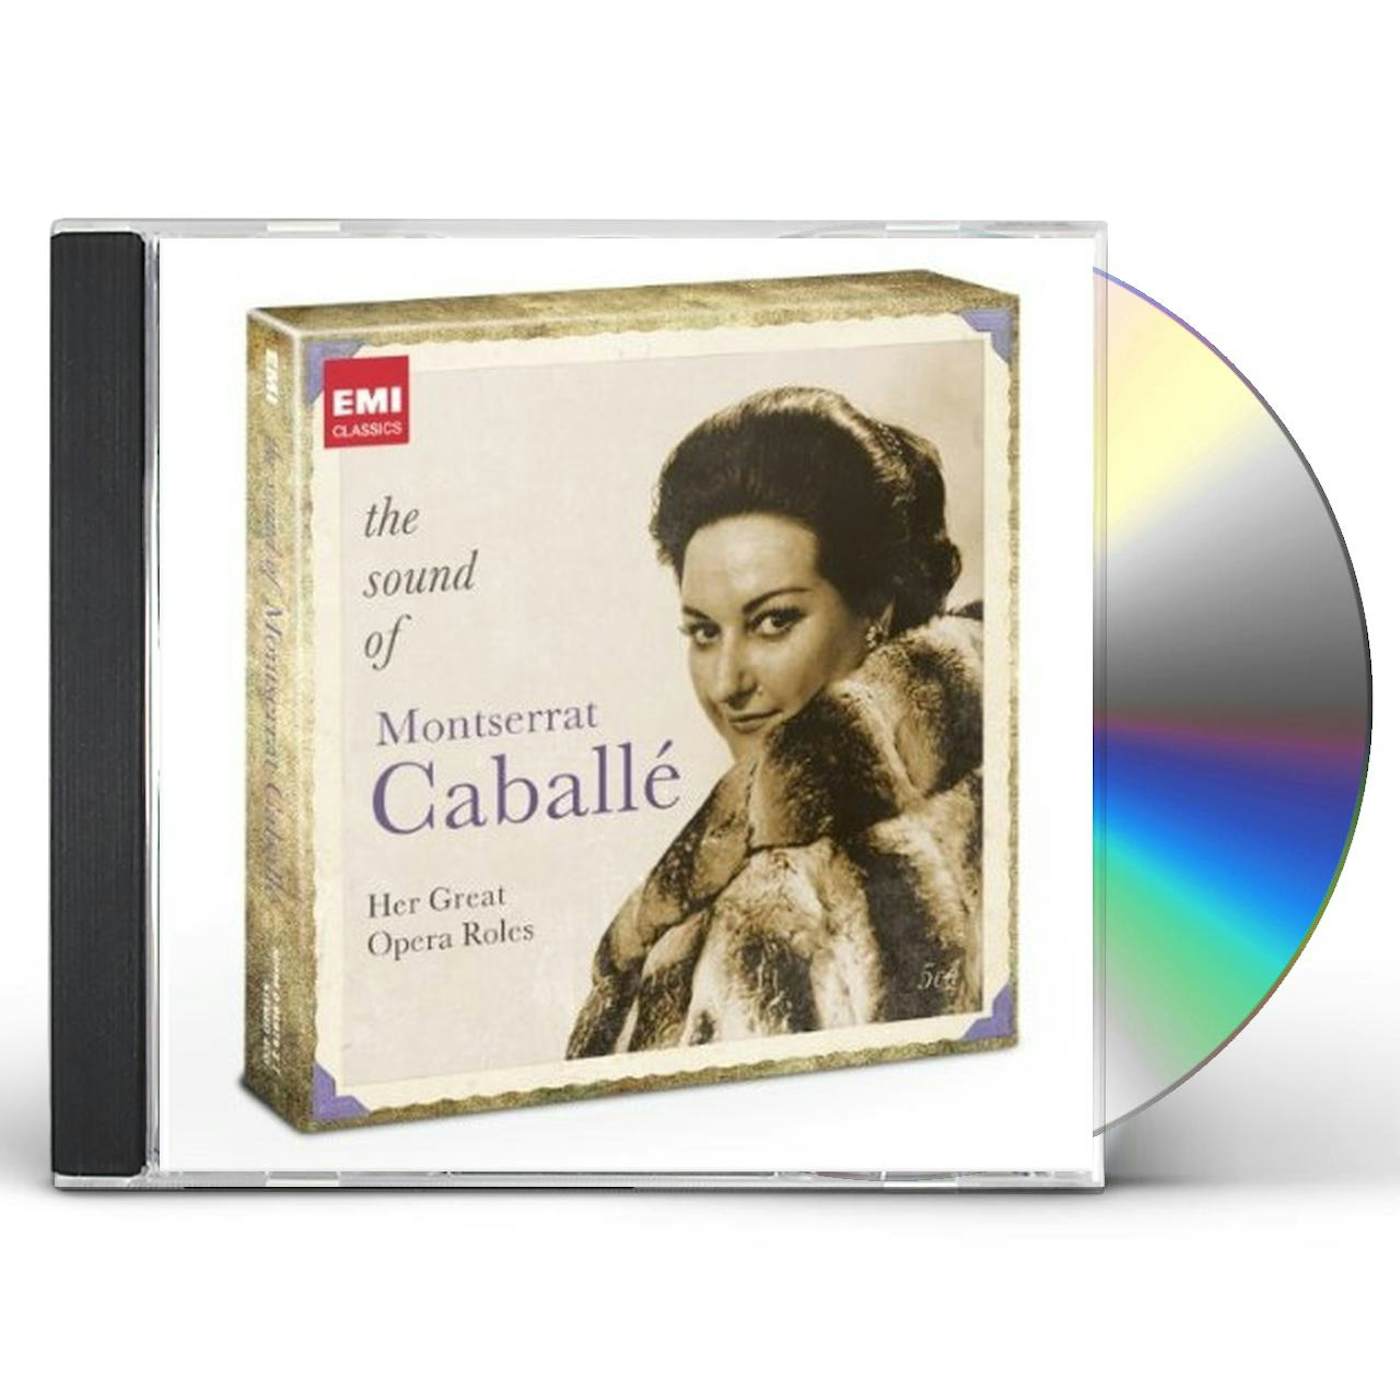 SOUND OF Montserrat Caballé CD